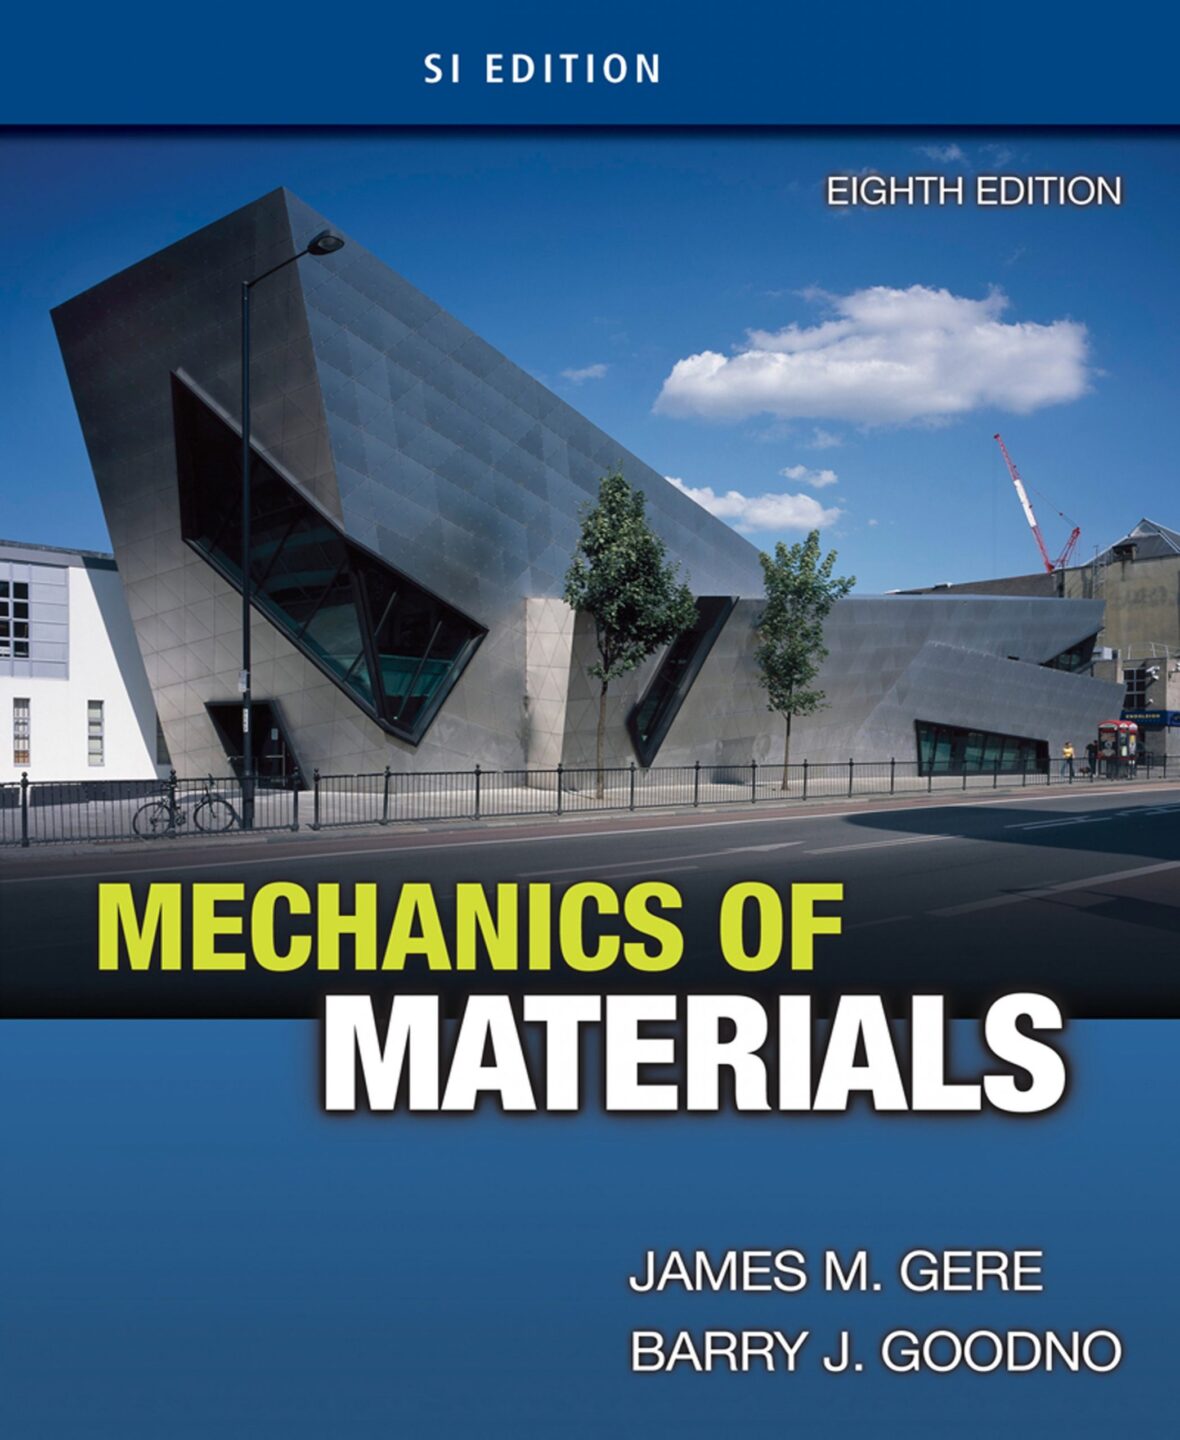 (PDF) Download Mechanics Of Matherials James Gere & Barry J. Goodno 8th Edition